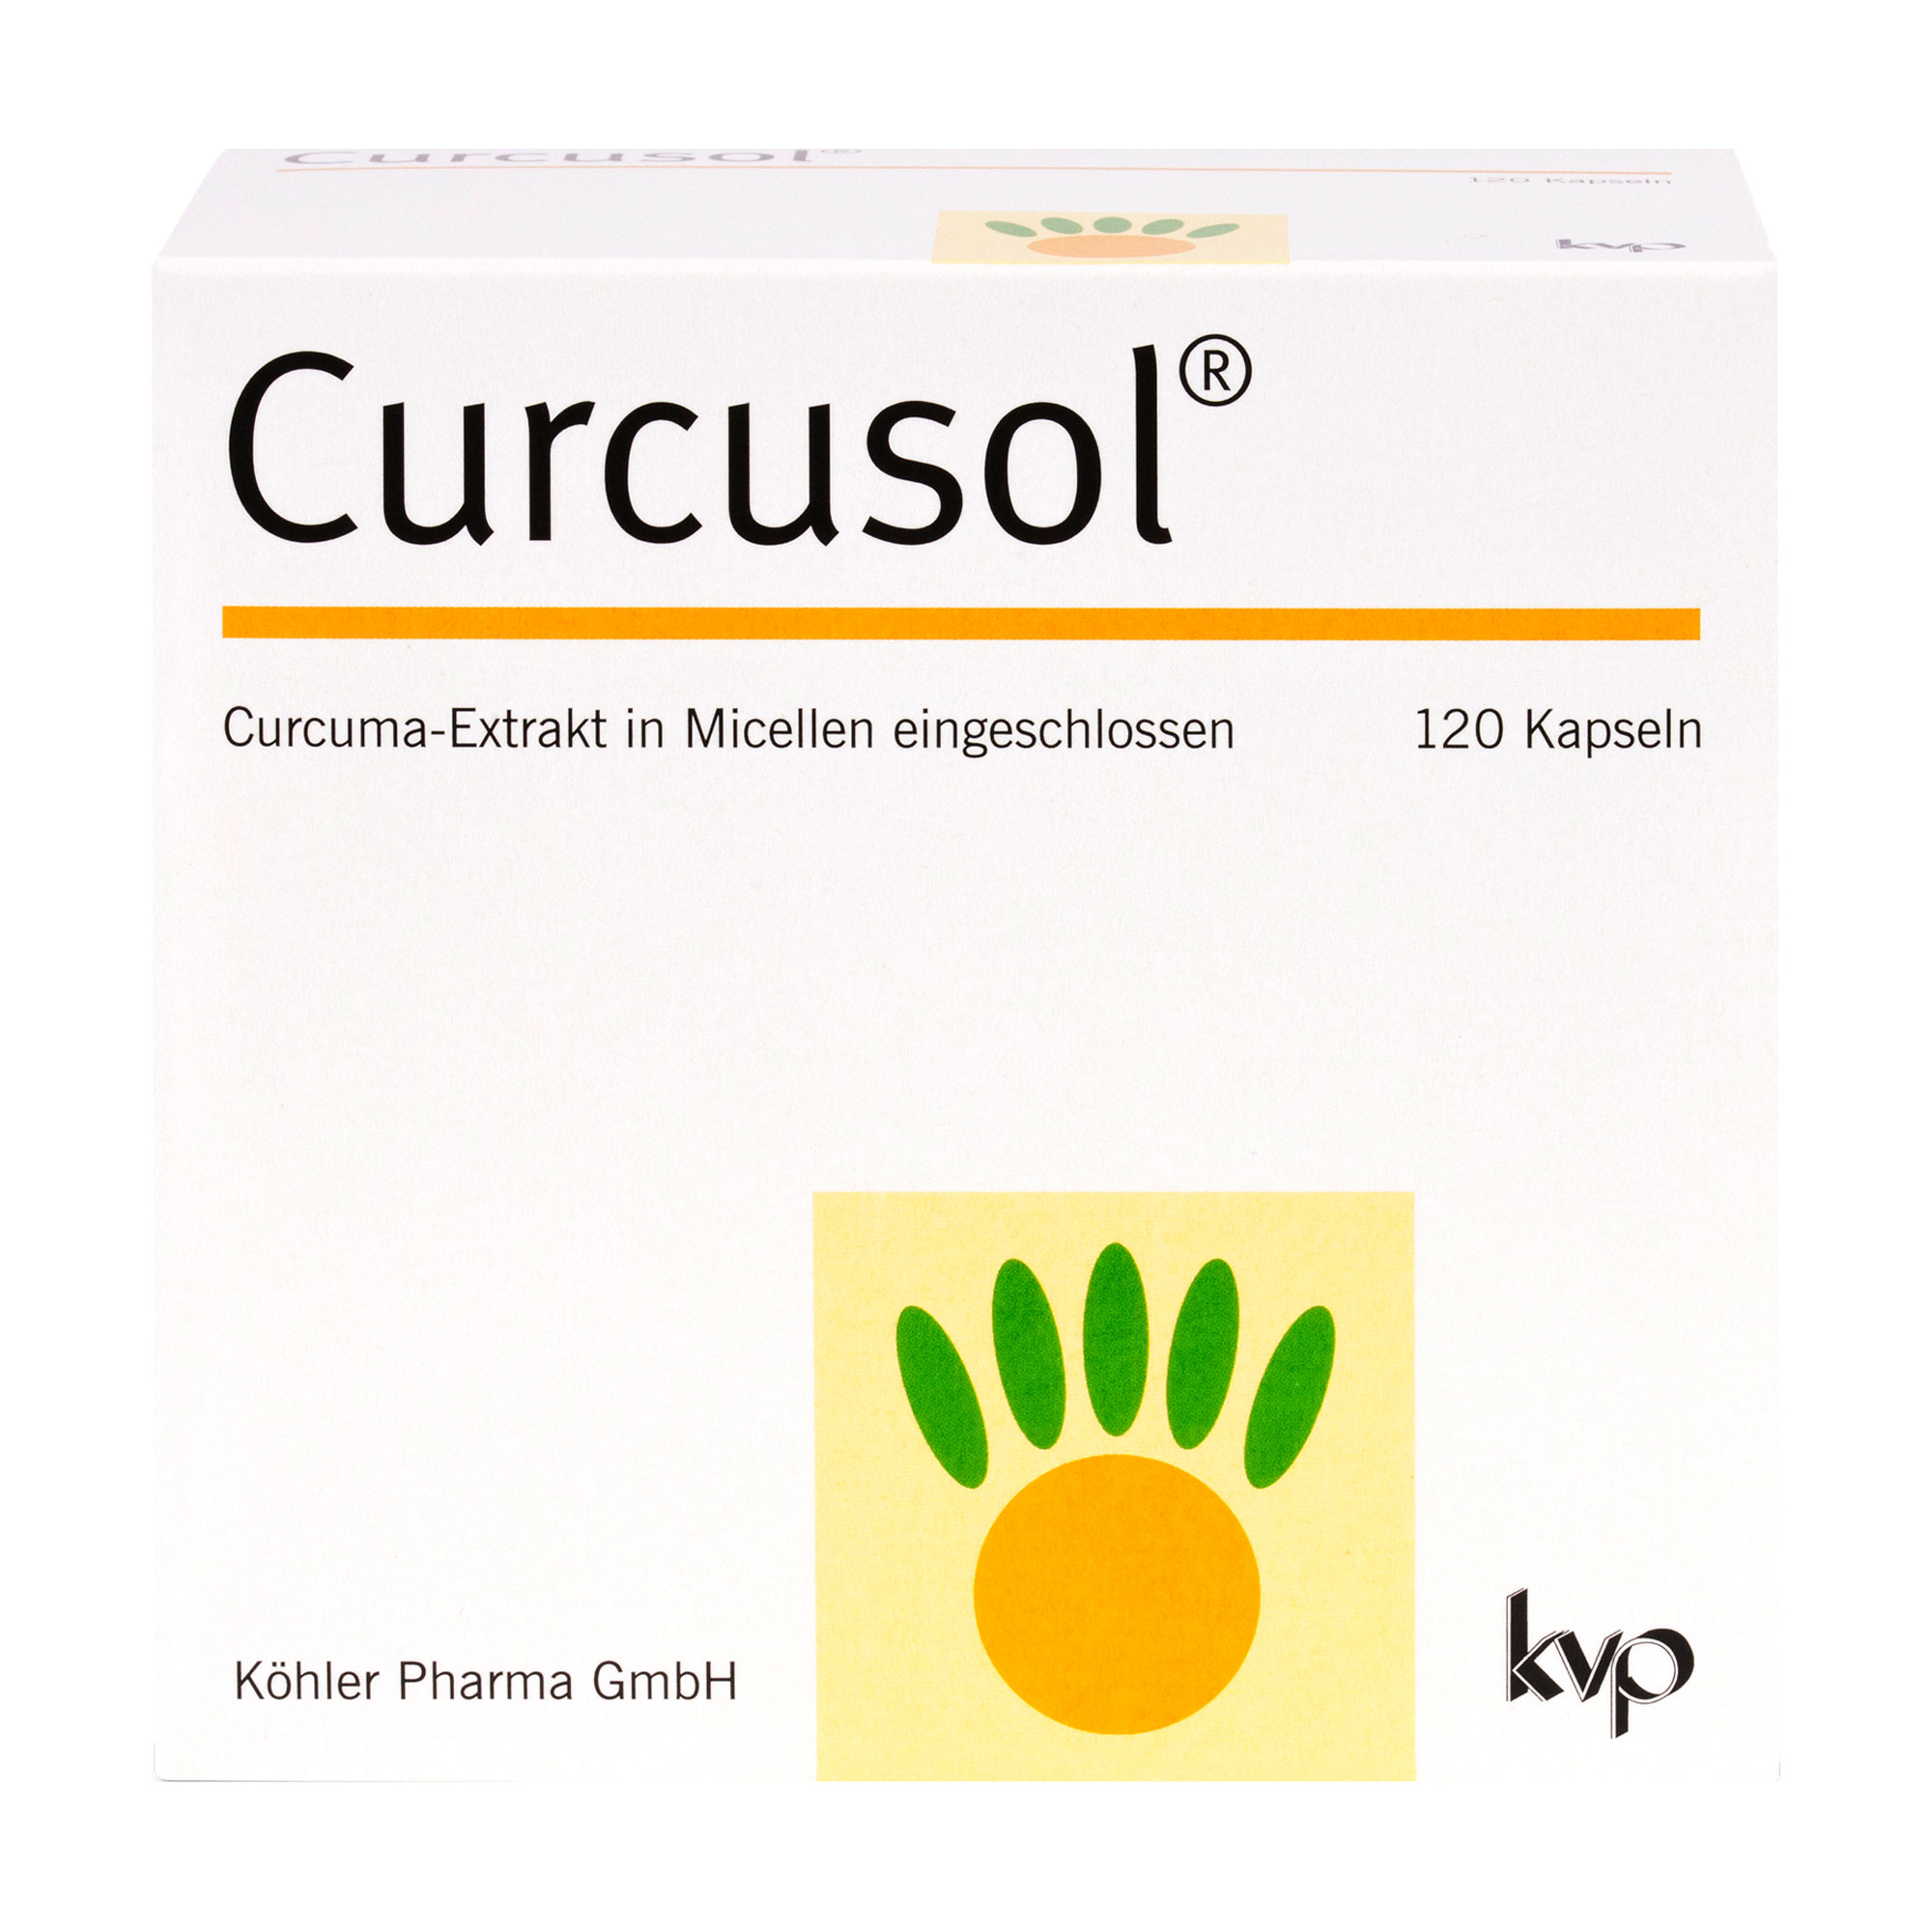 Nahrungsergänzungsmittel mit Curcuma-Extrakt.